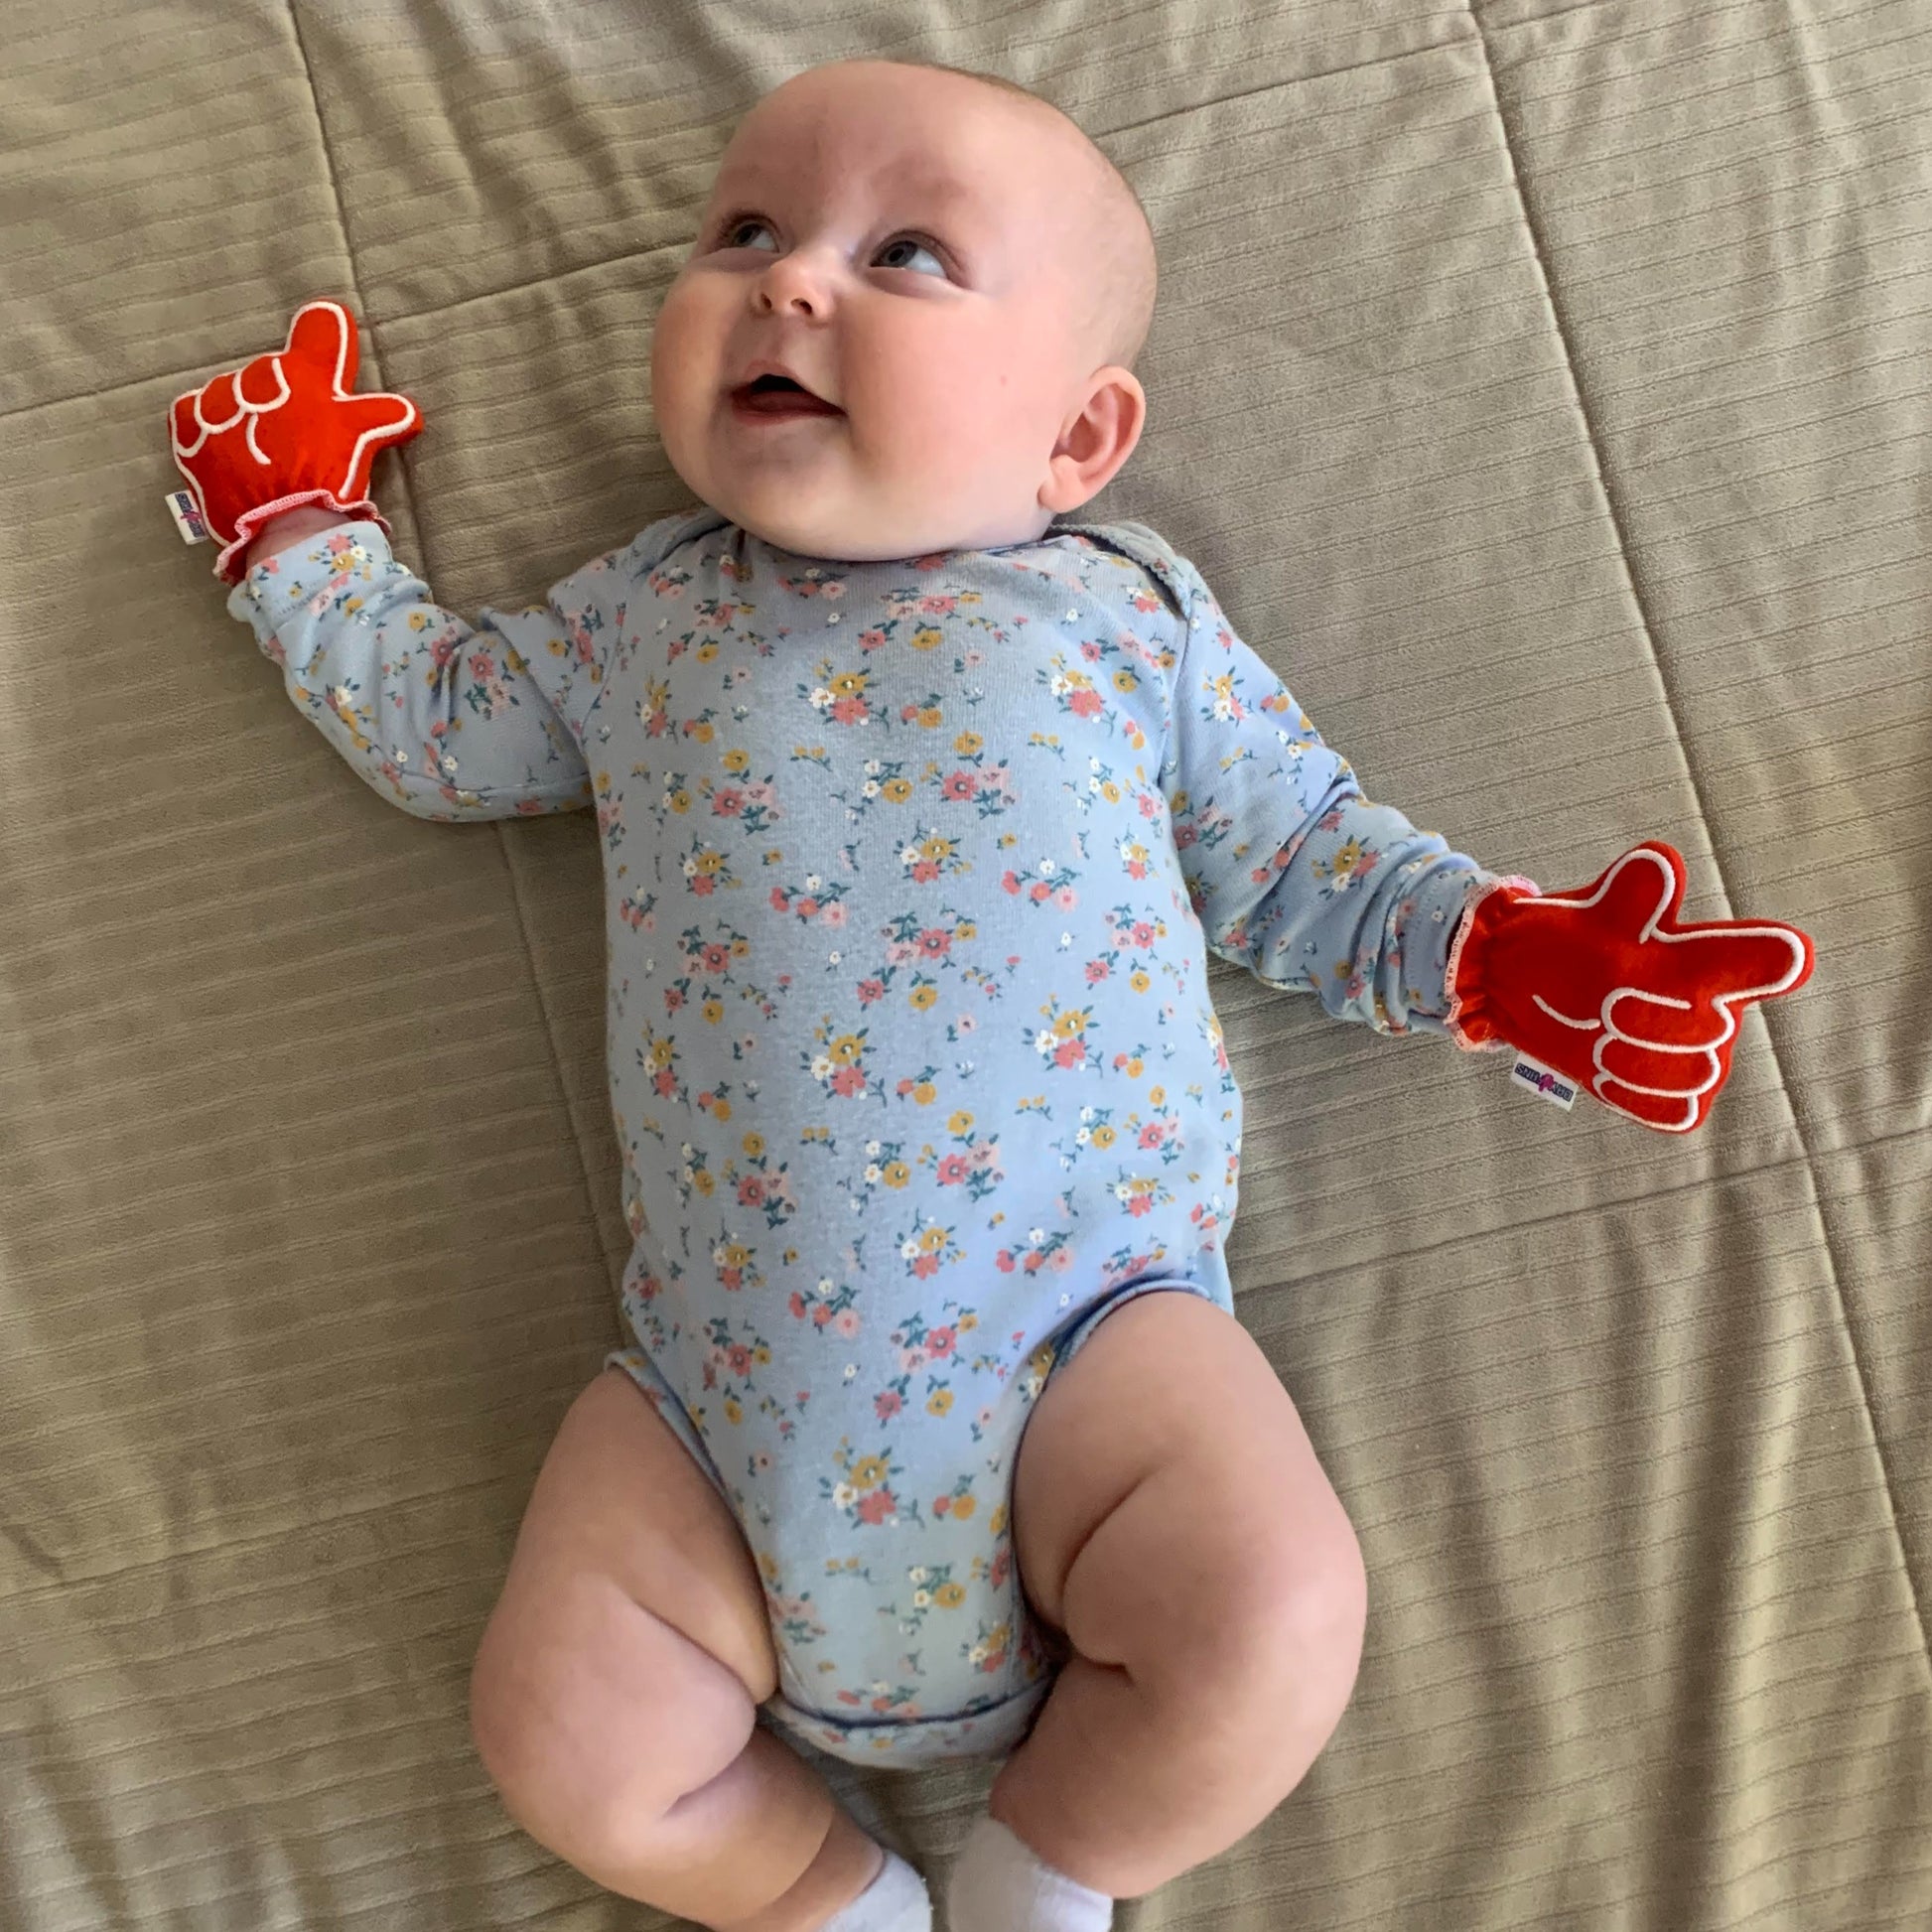 Newborn wearing Texas Tech Wreck Em baby mittens in red